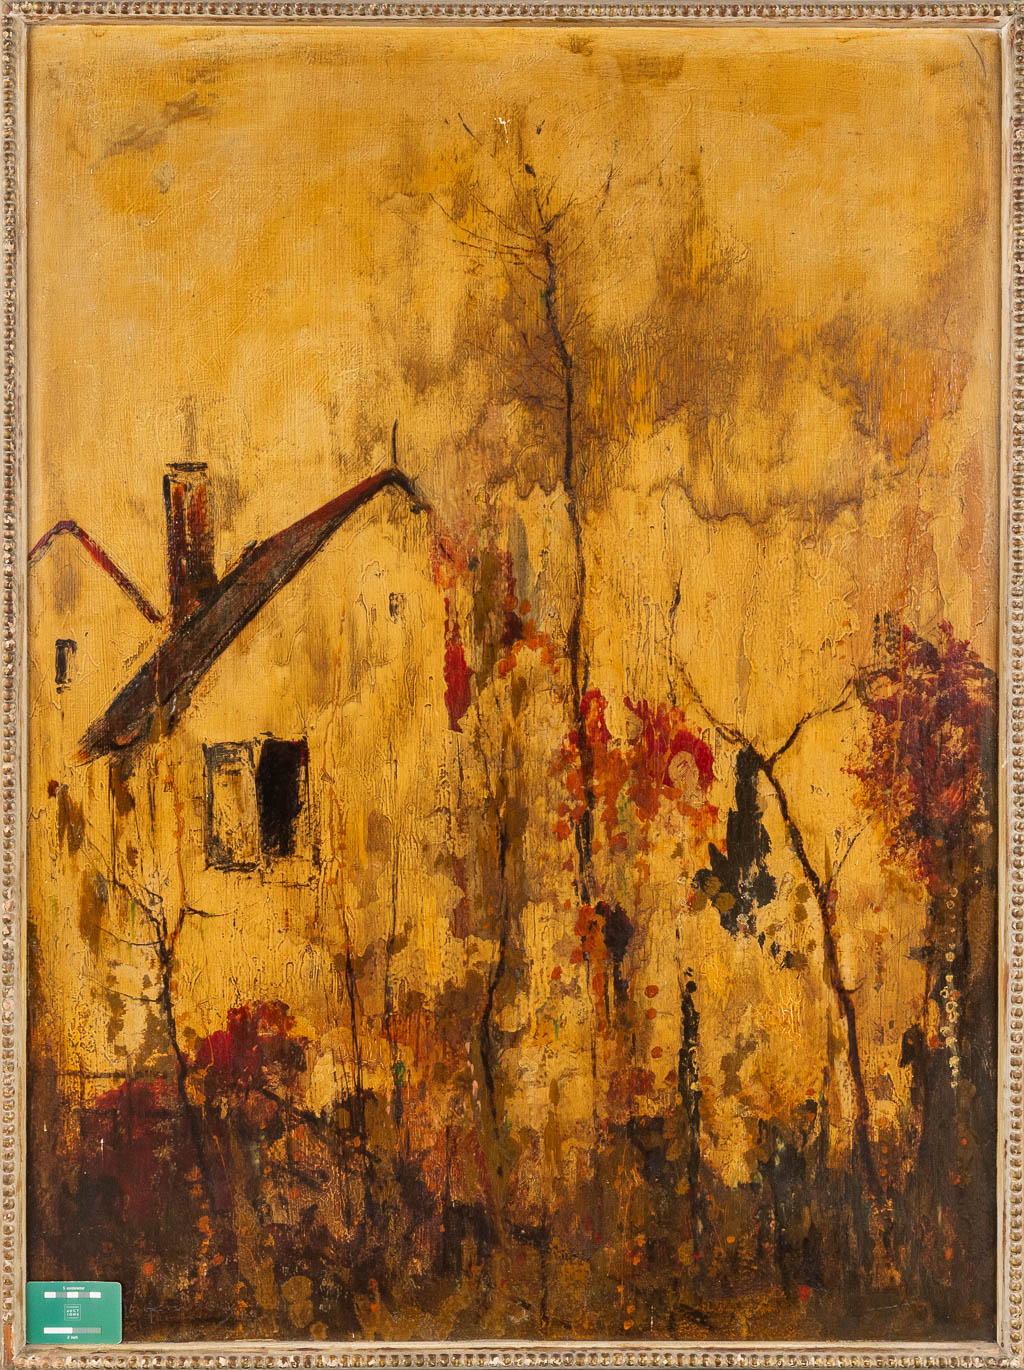 Paul HAGEMANS (1884-1959) 'Fall' oil on board. (W:87 x H:118 cm)